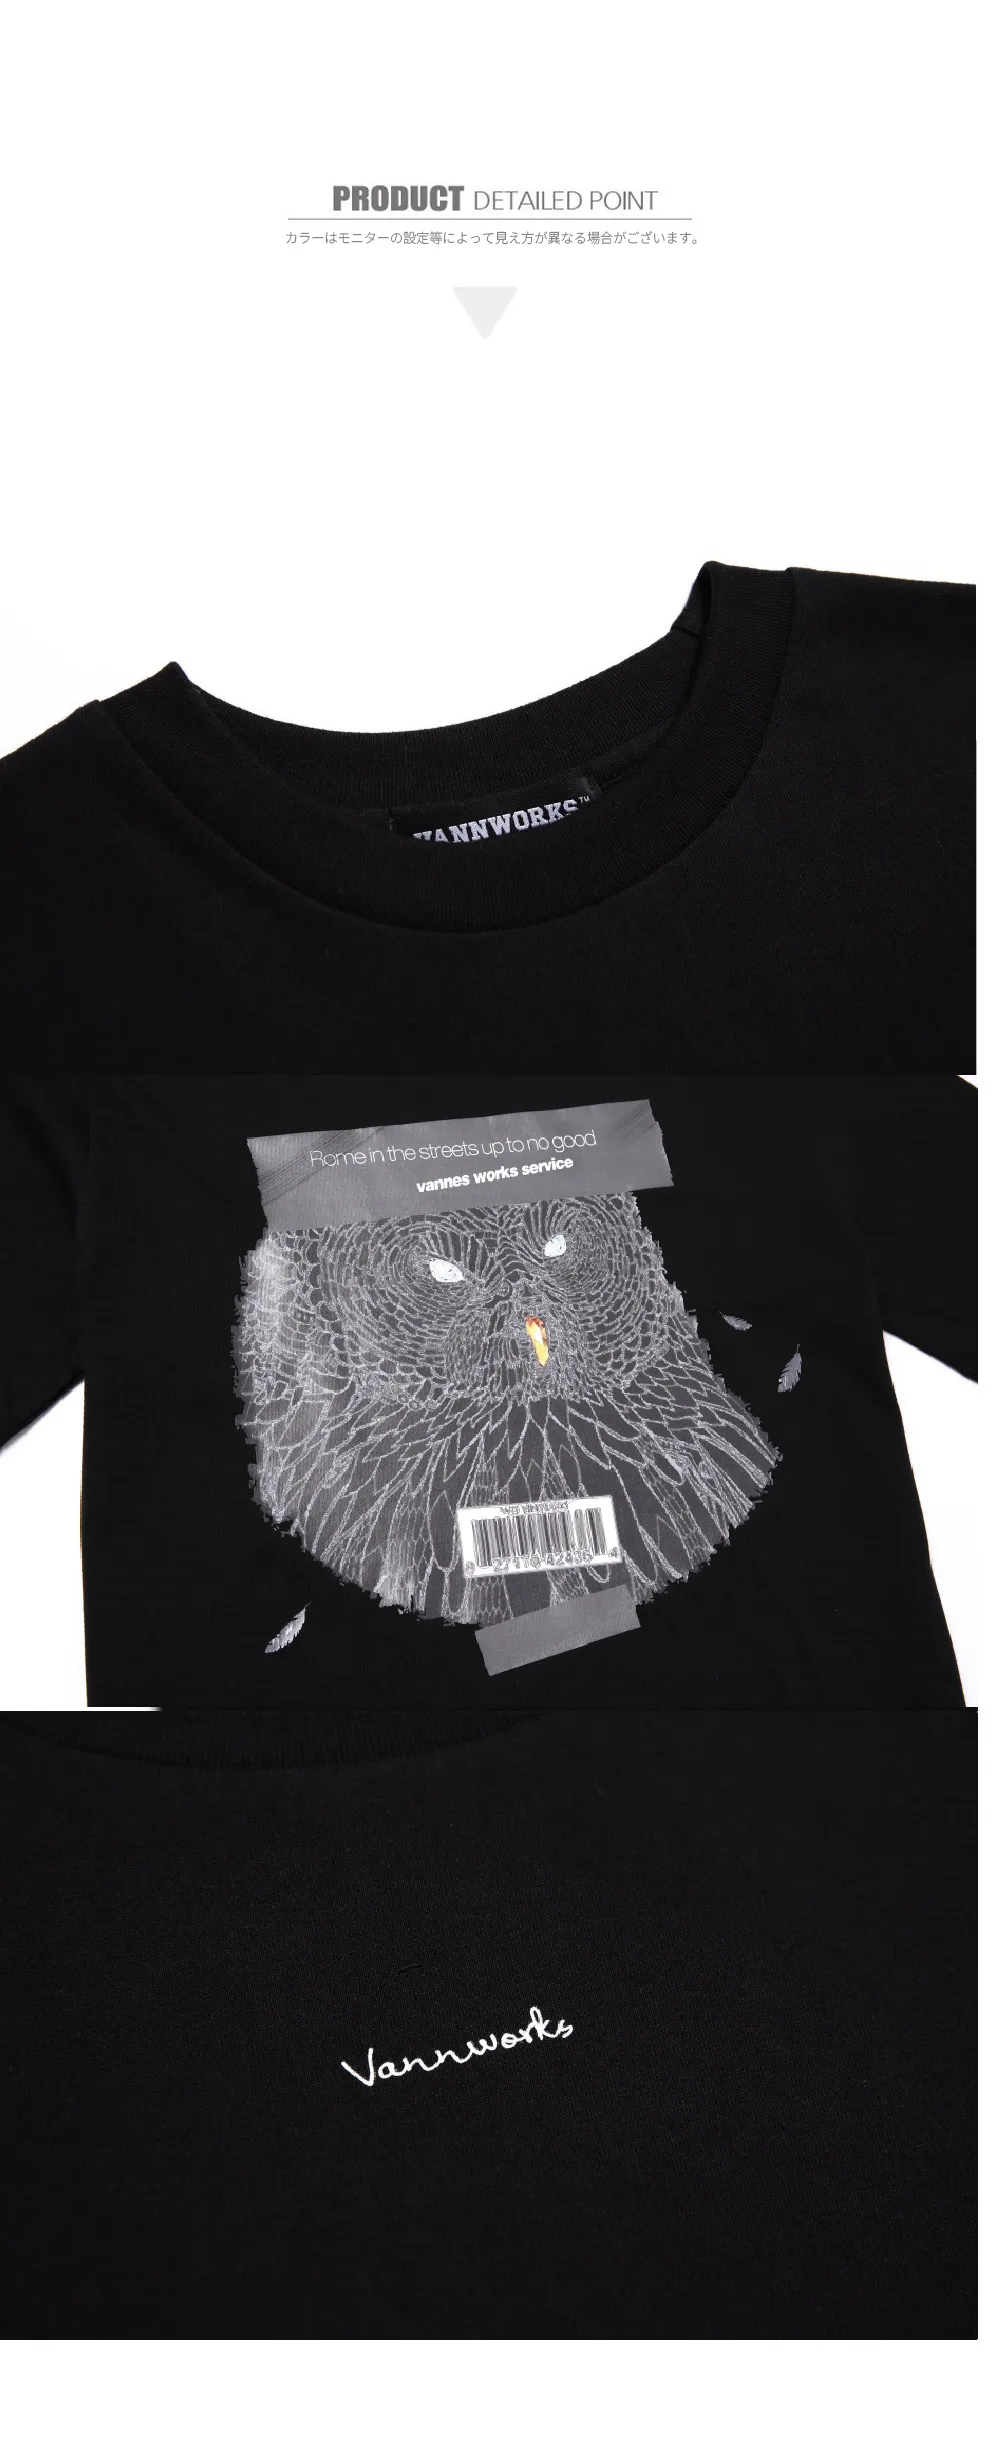 *VANNWORKS*OWL Tシャツ(VNAHTS111)ホワイト | 詳細画像5